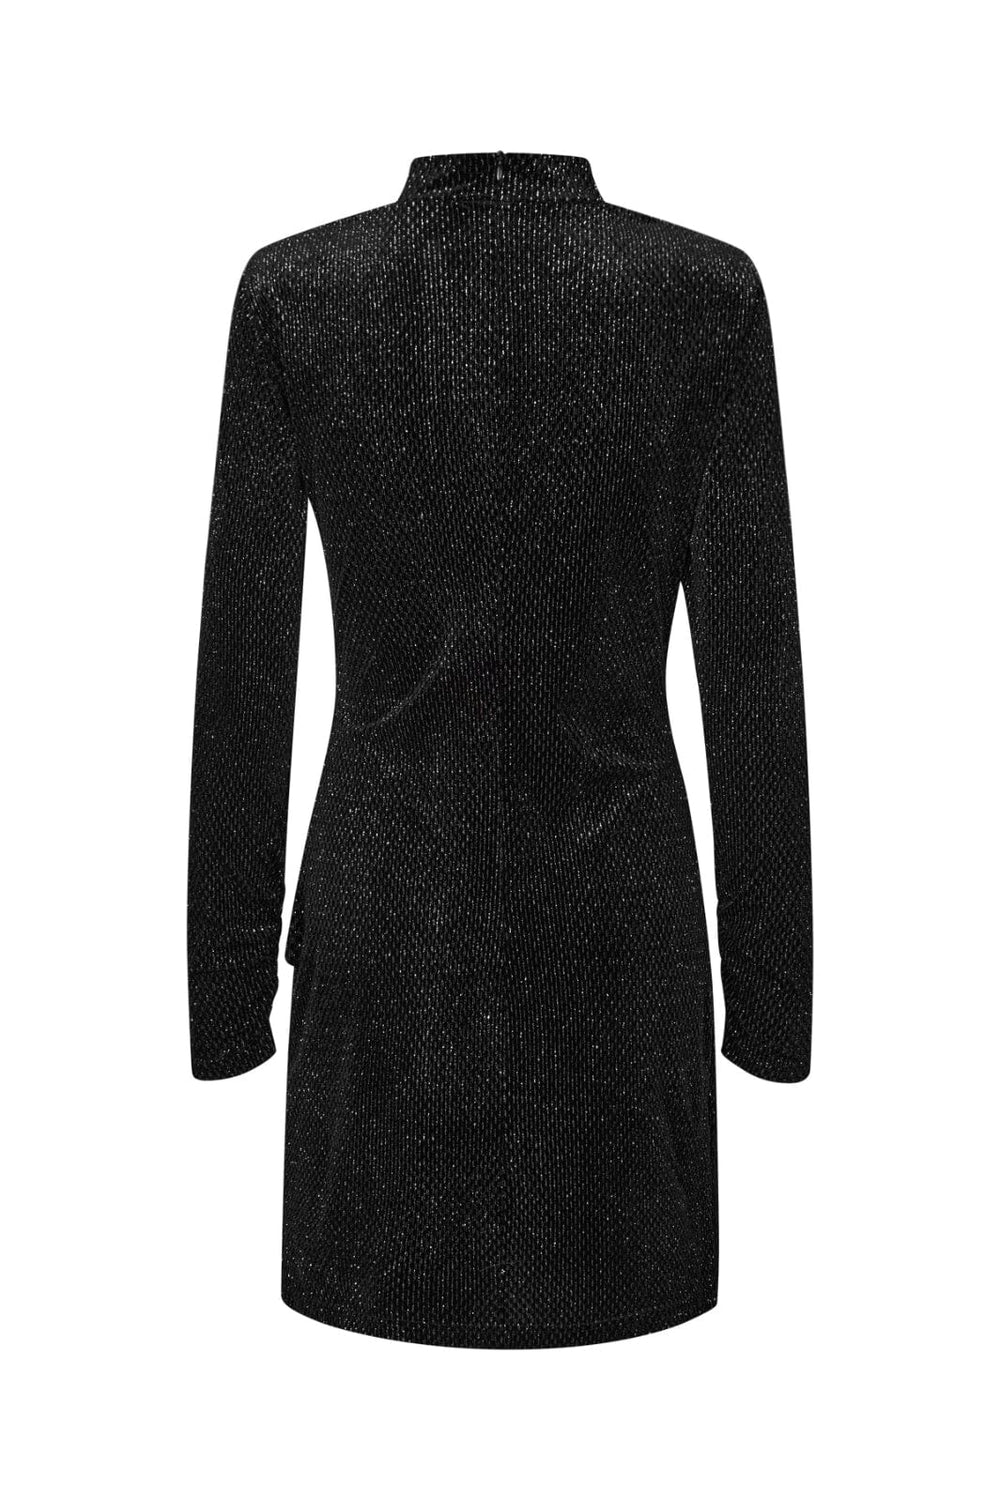 Cras - Drewcras Dress - Black Kjoler 